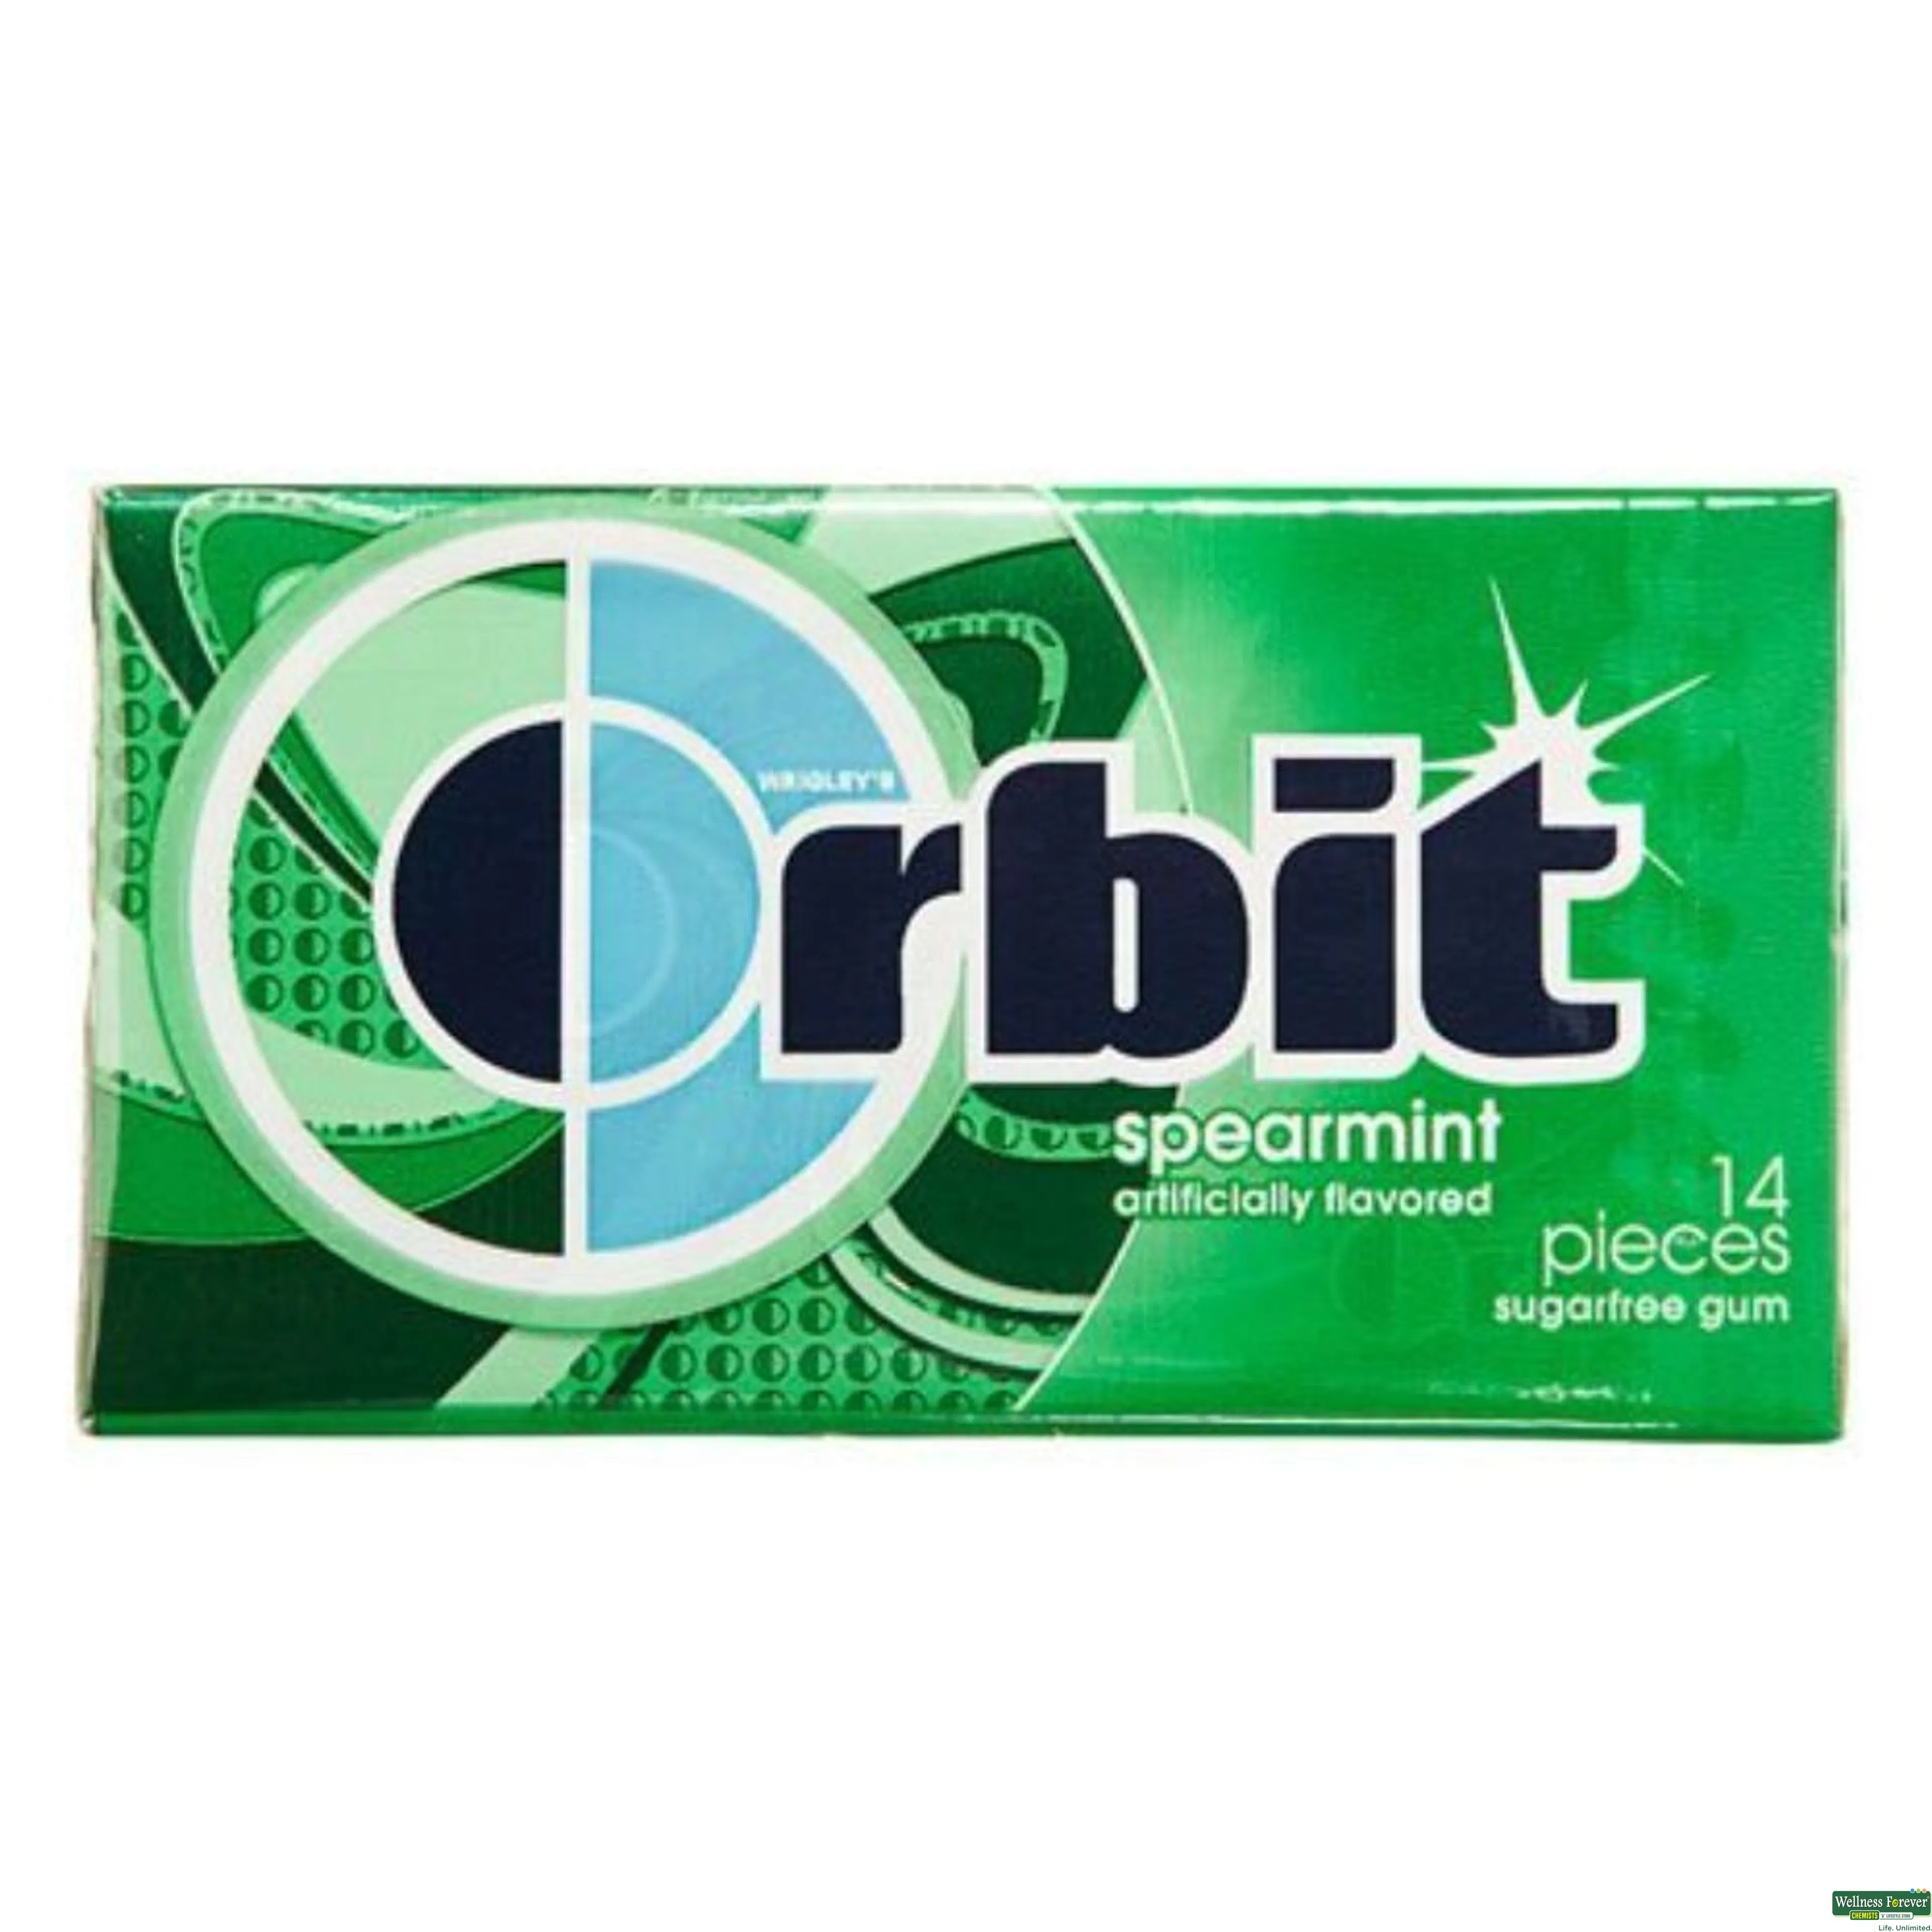 ORBIT CHEW GUM S/F SPEARMINT 14PC-image